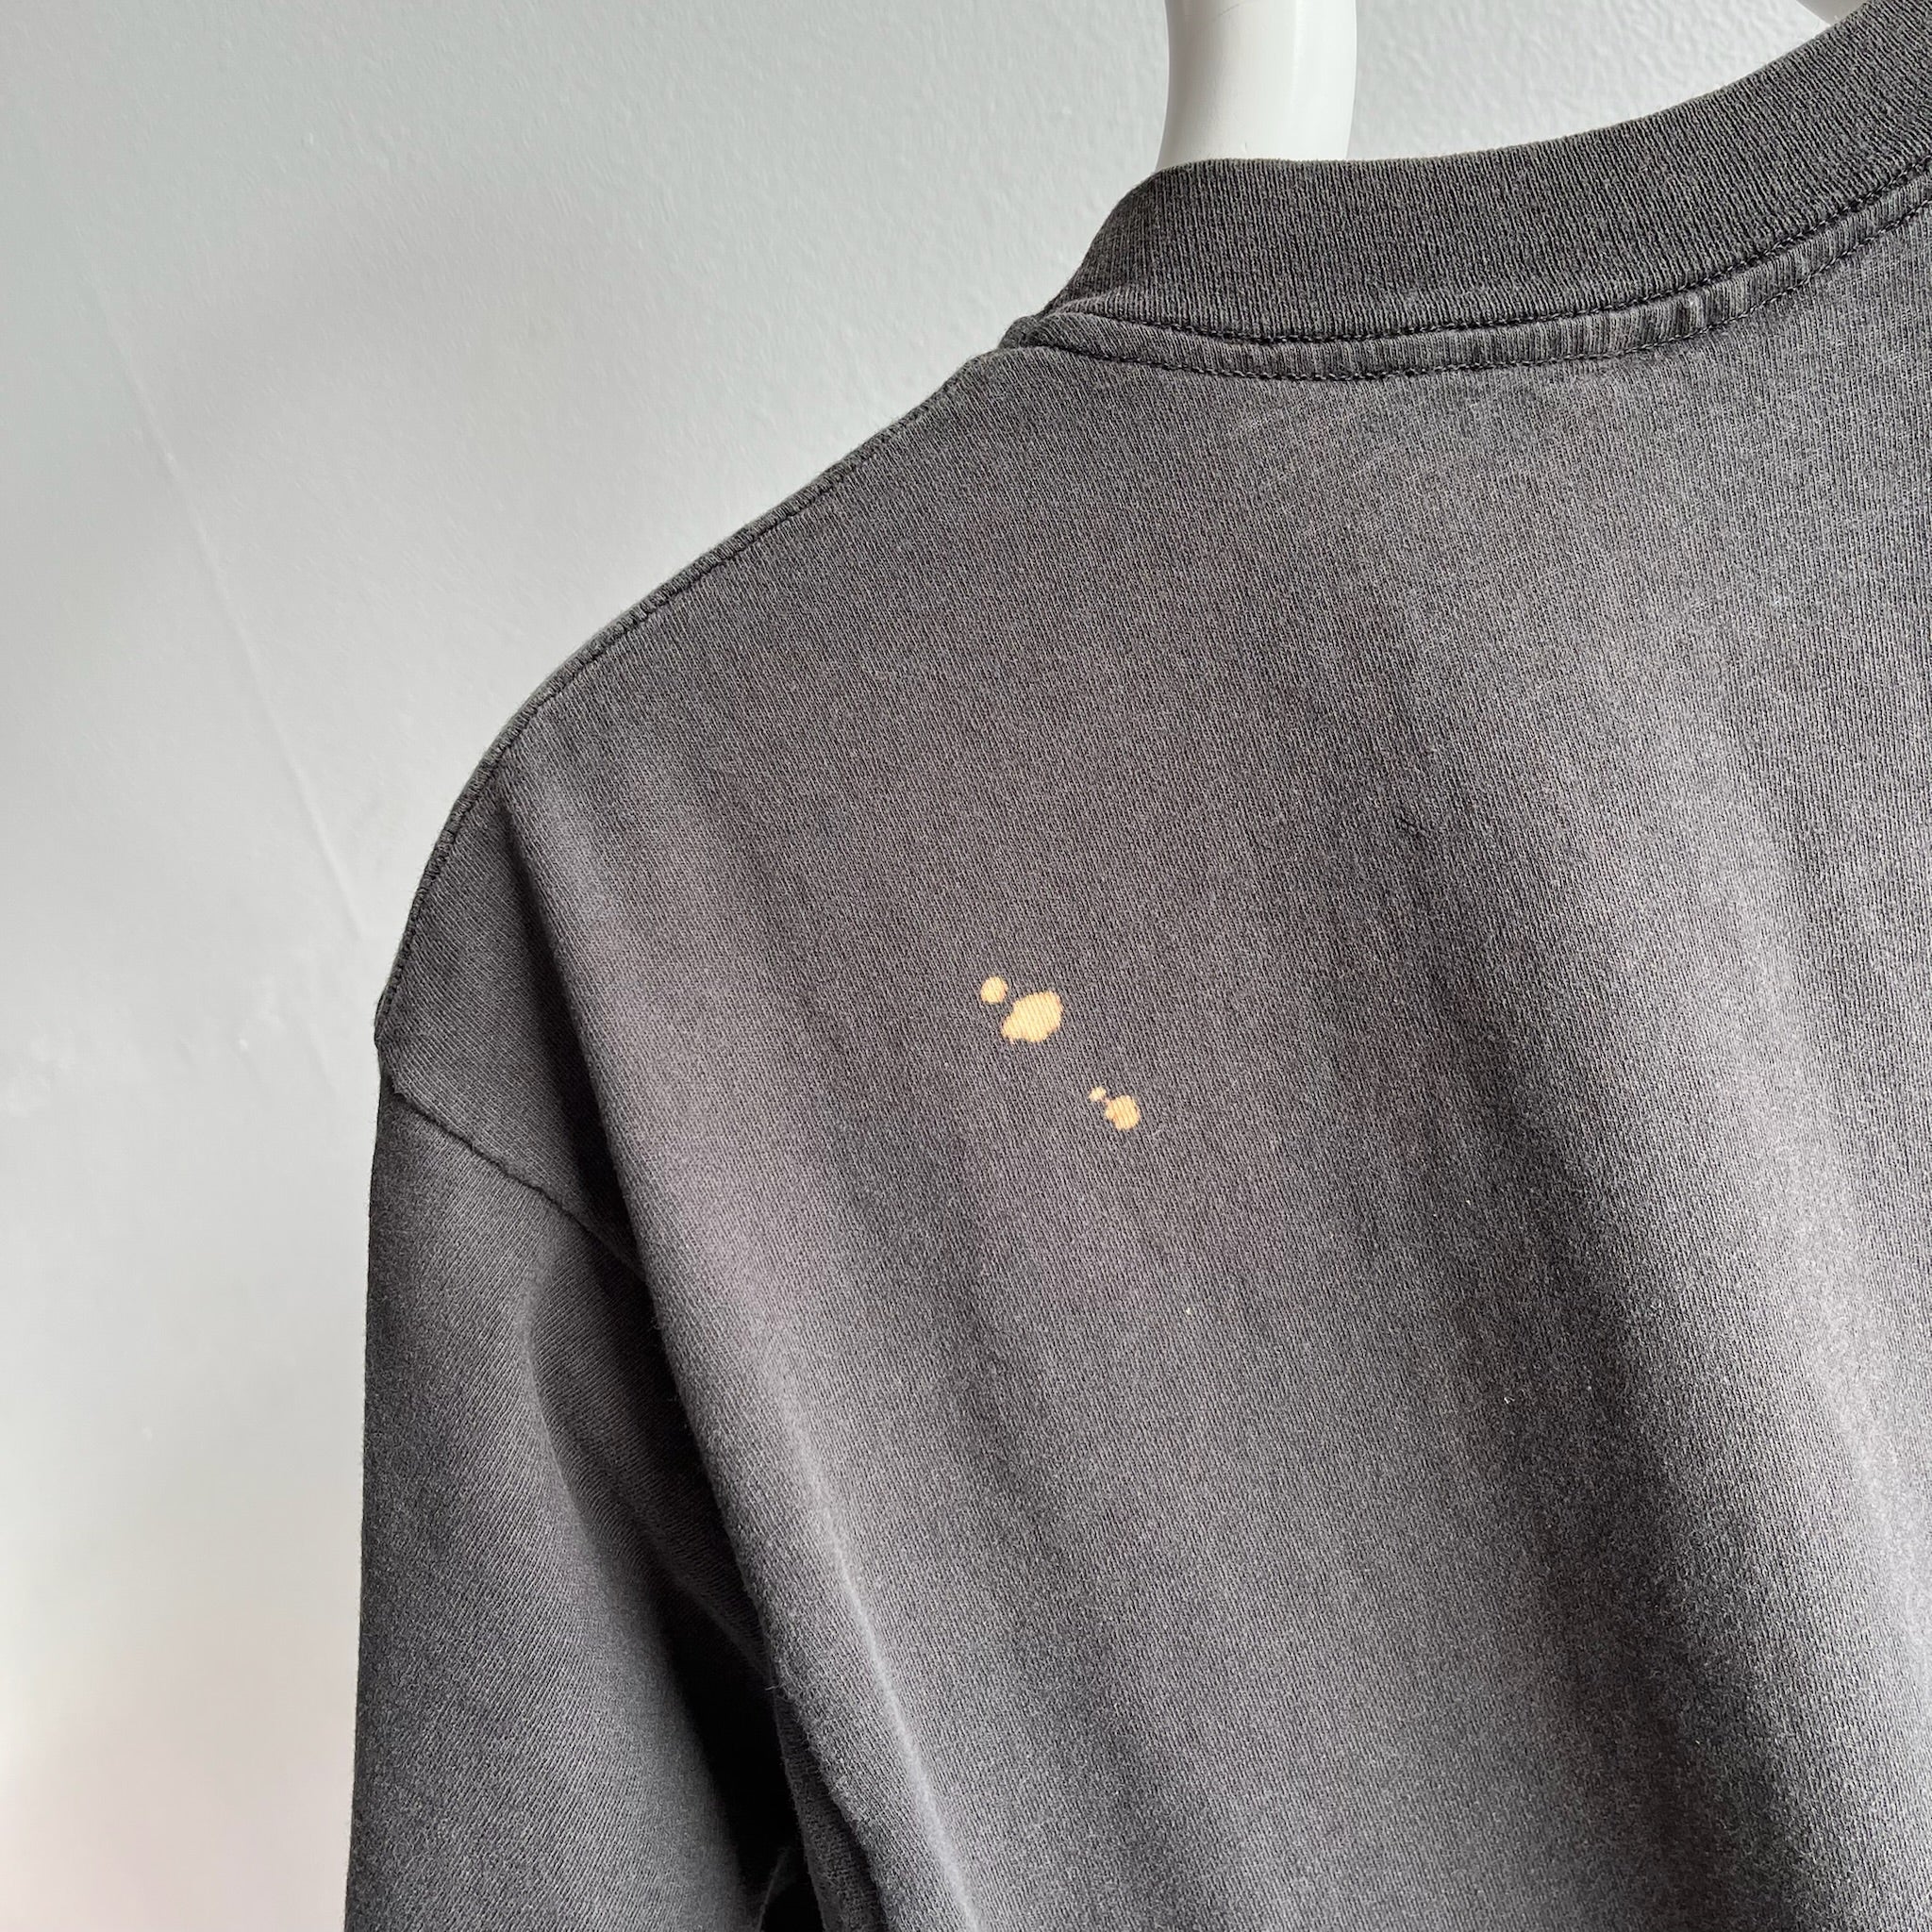 1980s FOTL Faded Blank Black Pocket T-Shirt - Single Stitch